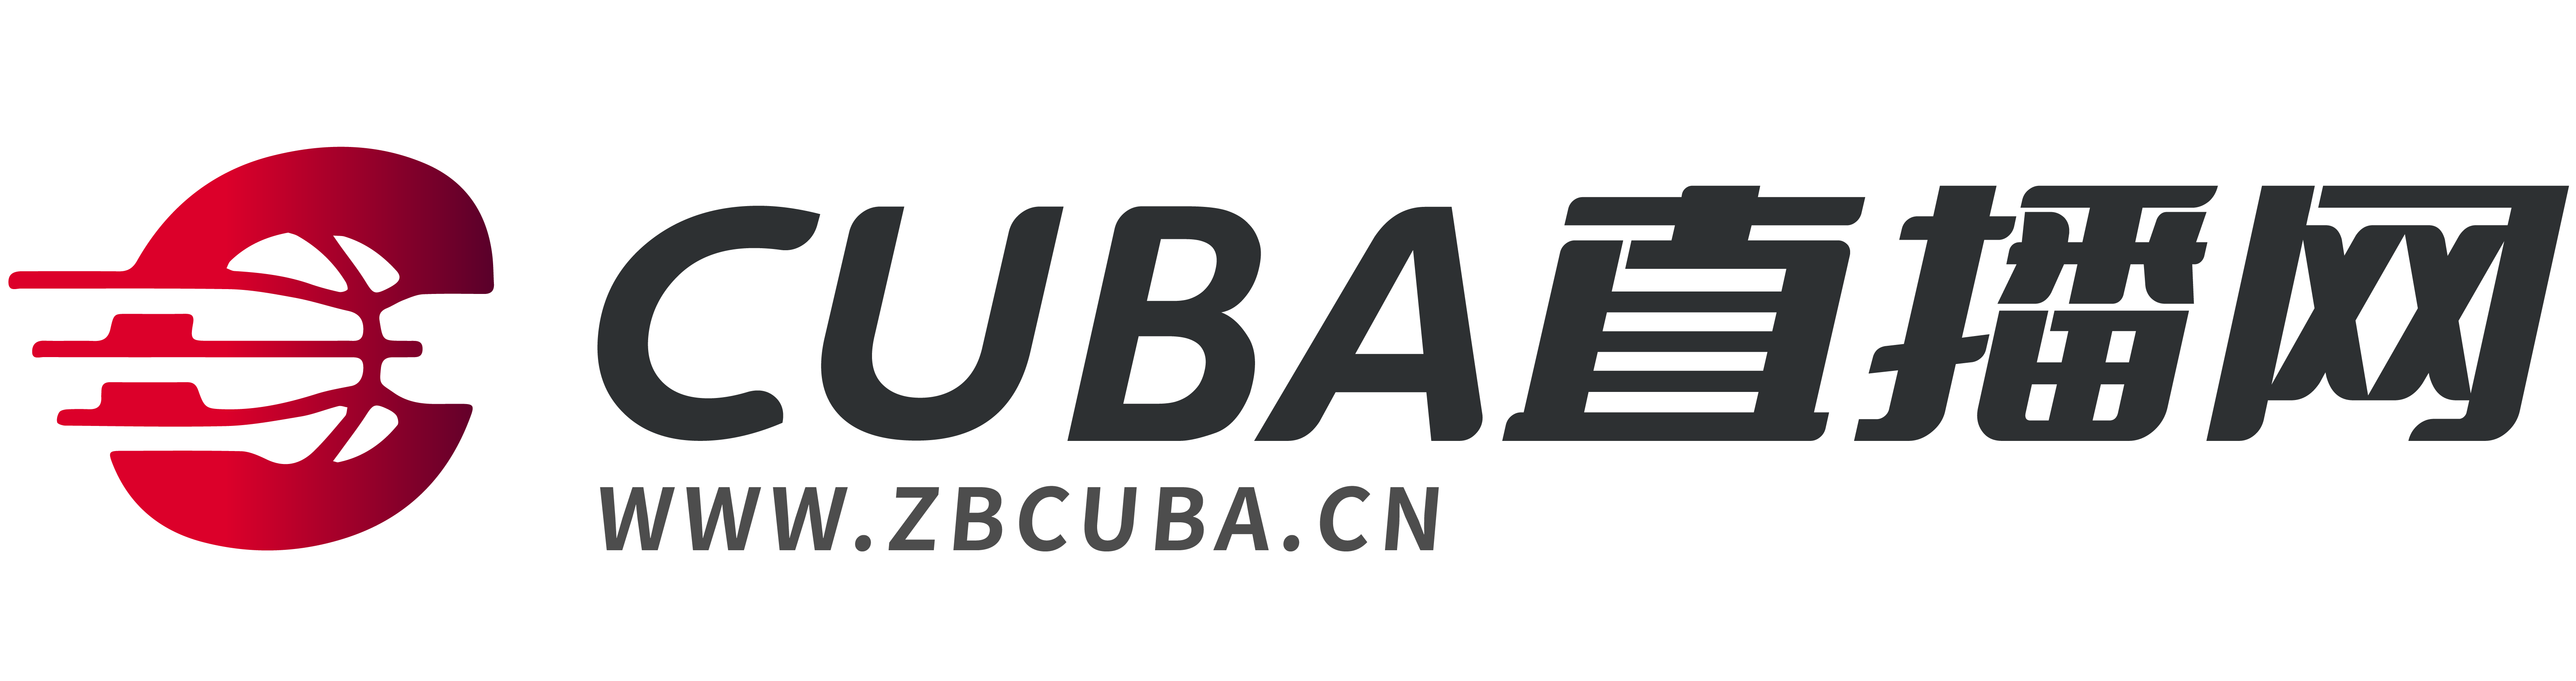 Cuba篮球比赛直播_篮球比赛直播Cuba|Cuba直播平台-Cuba直播网